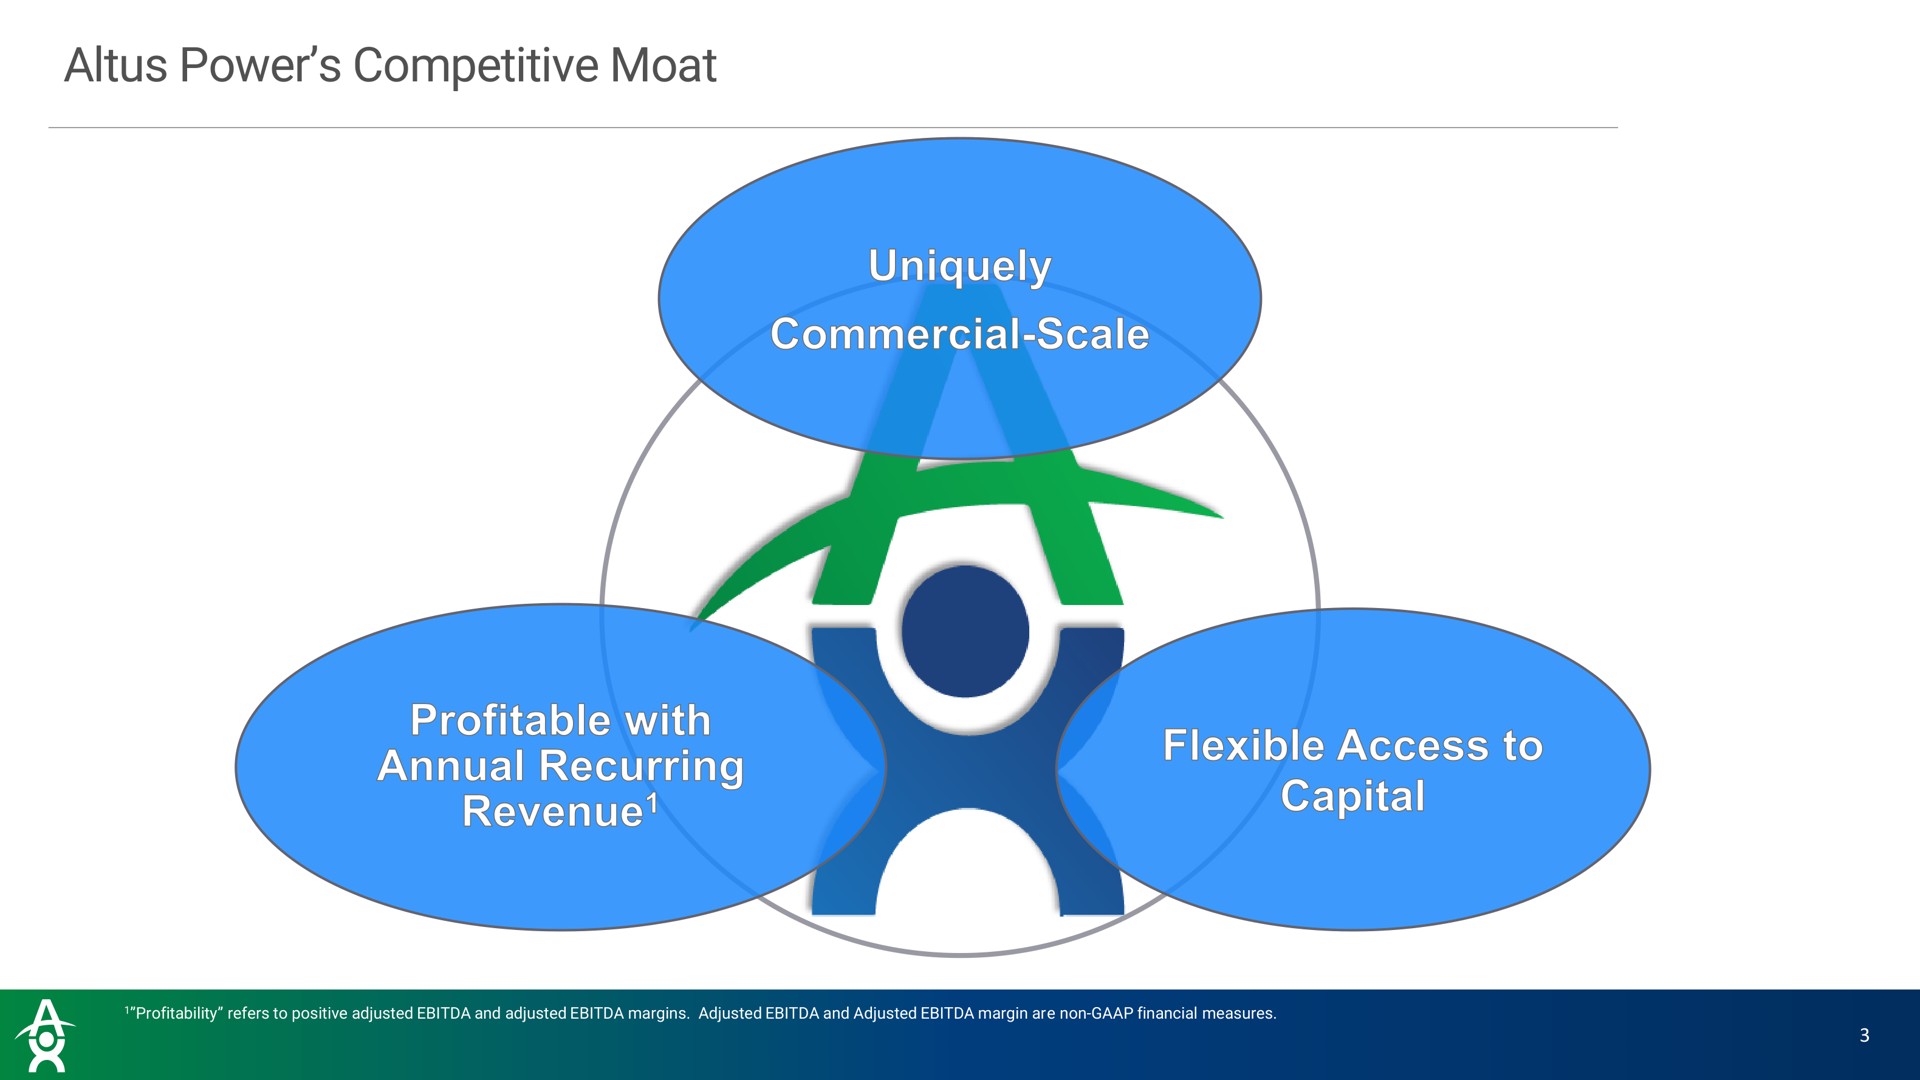 power competitive moat uniquely profitable with lee capital | Altus Power